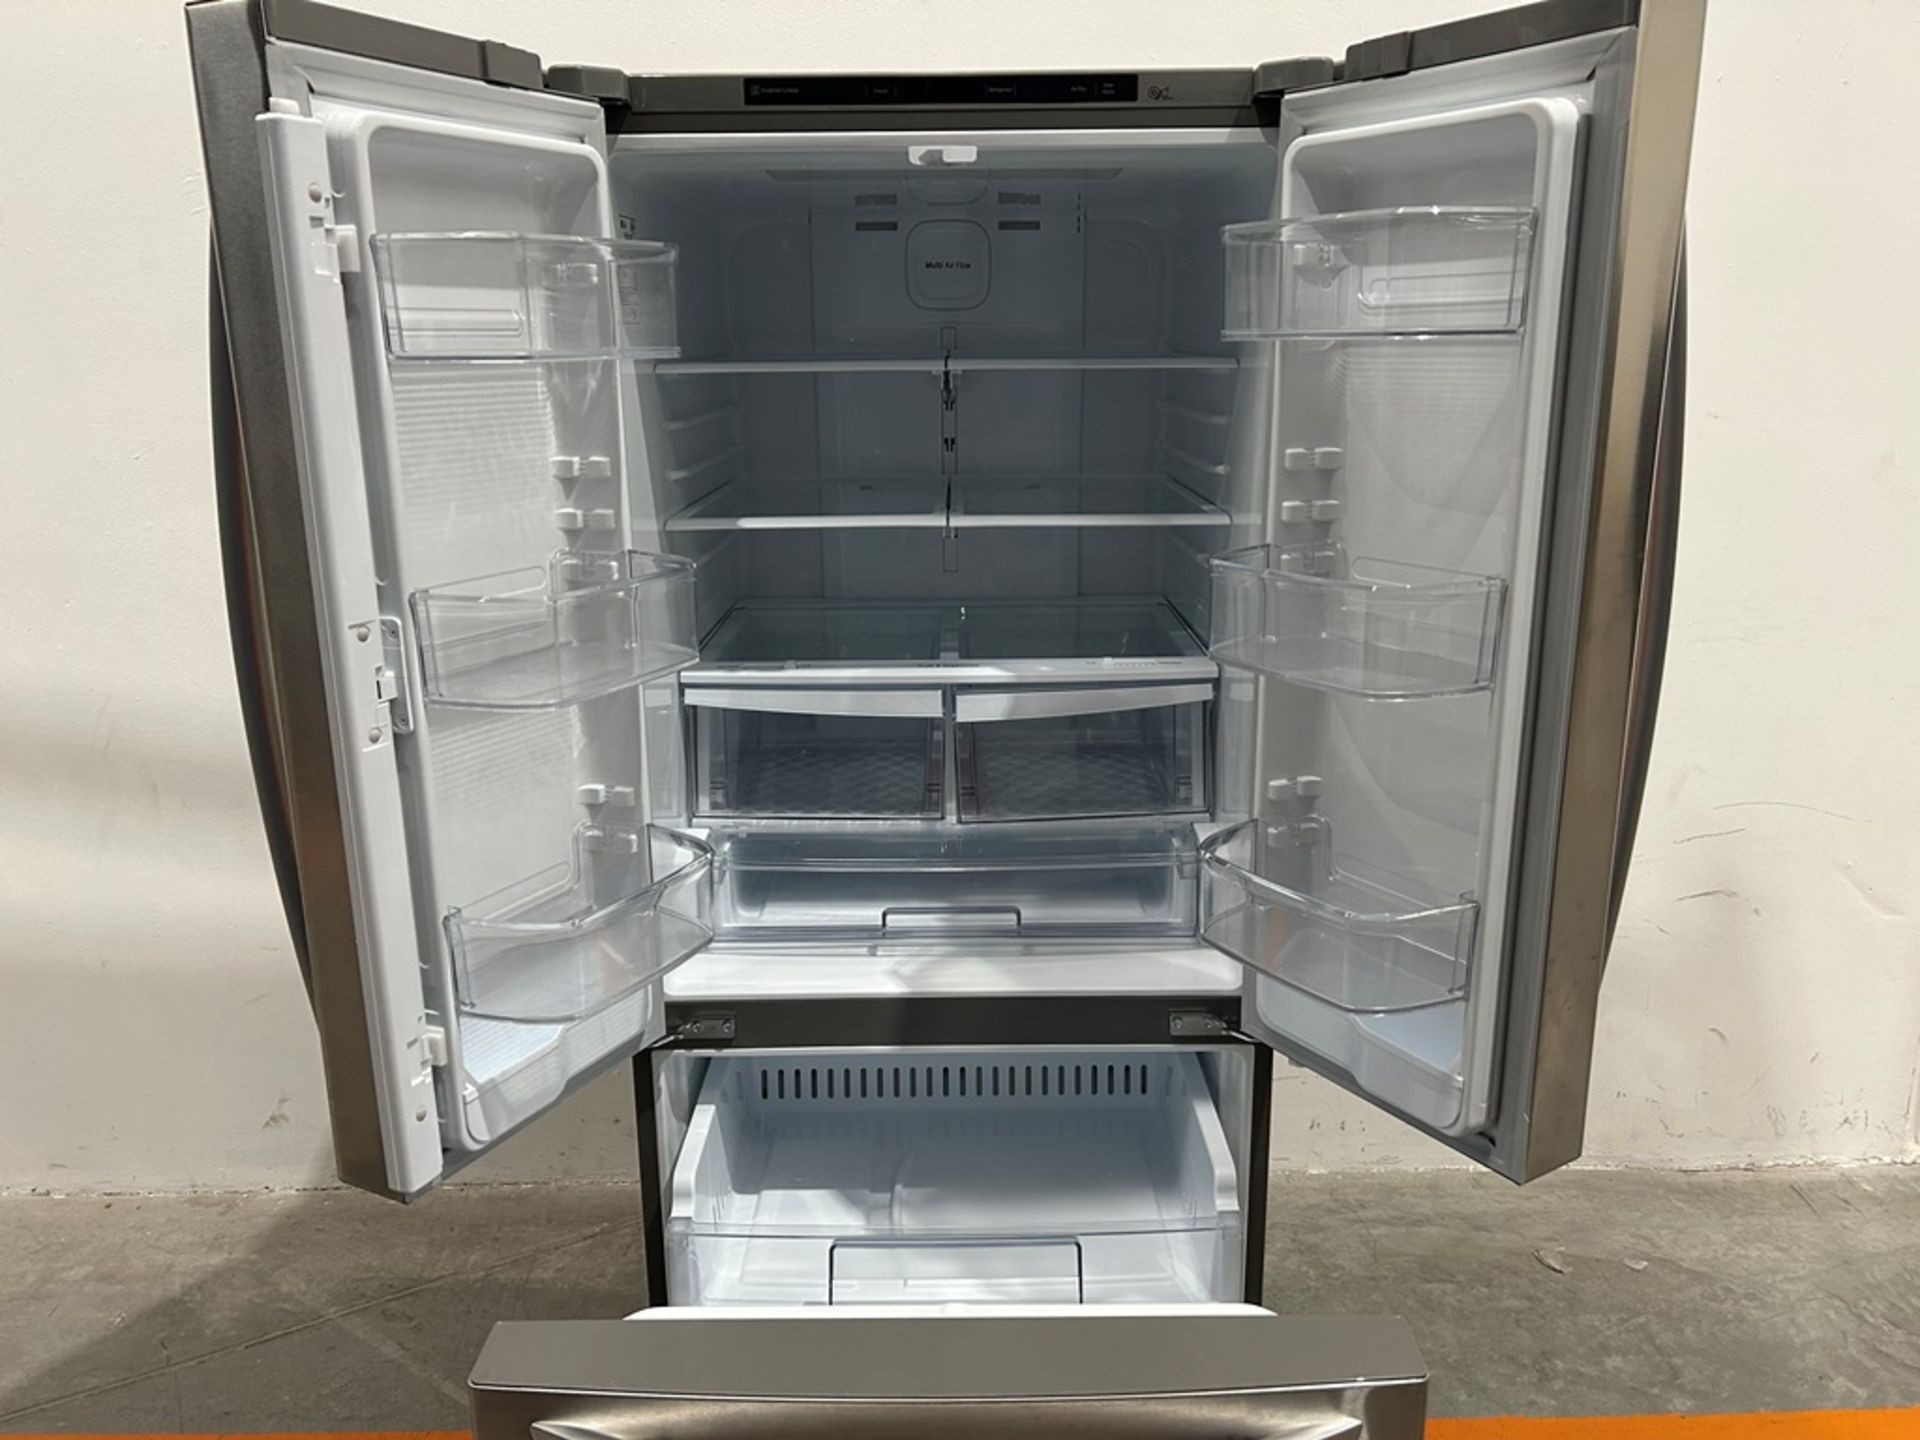 Refrigerador Marca LG, Modelo GF22BGSK, Serie 49652, Color GRIS (Favor de inspeccionar) - Image 4 of 11